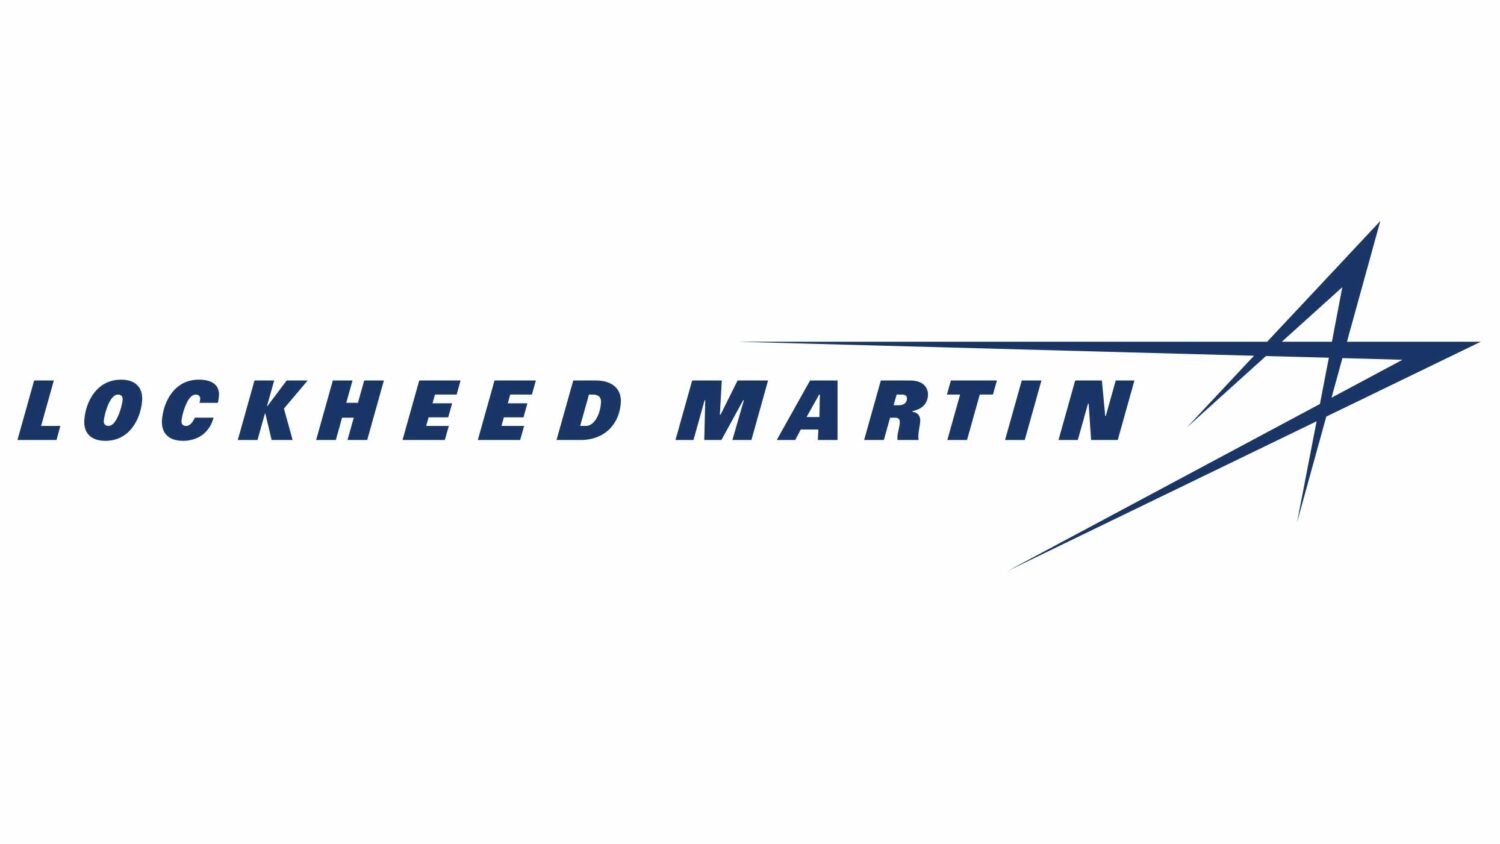 H Lockheed Martin ανακοινώνει την συνεργασία της με ομάδα της ΕΑΒ